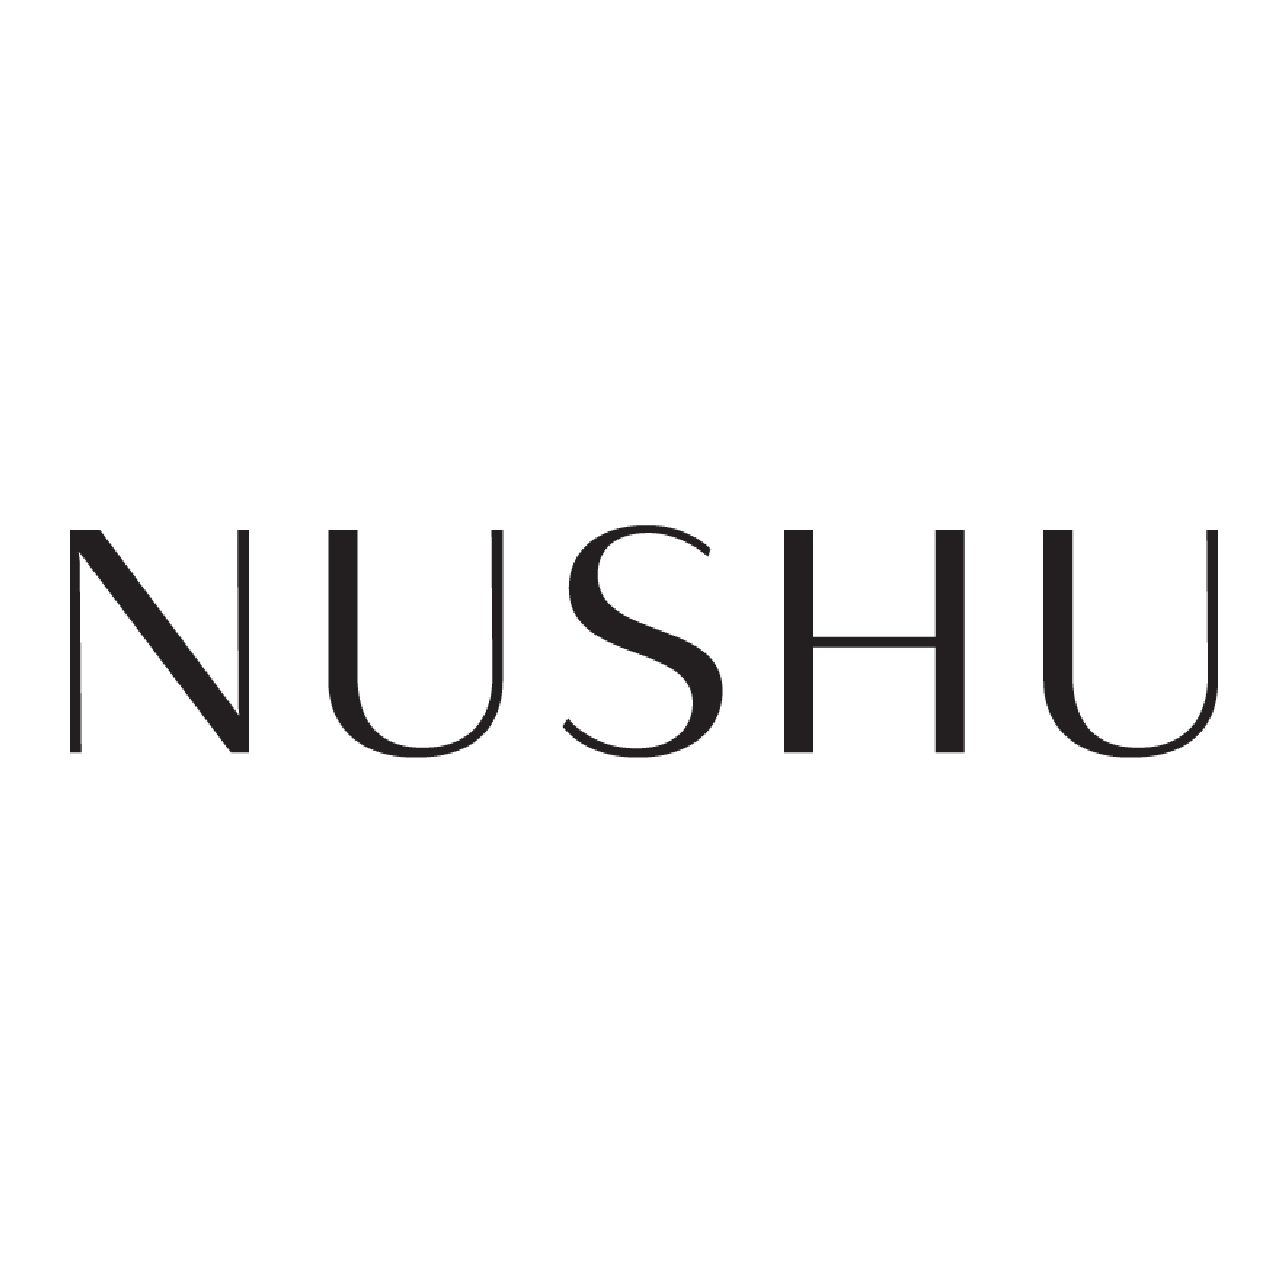 nushu-01.jpg